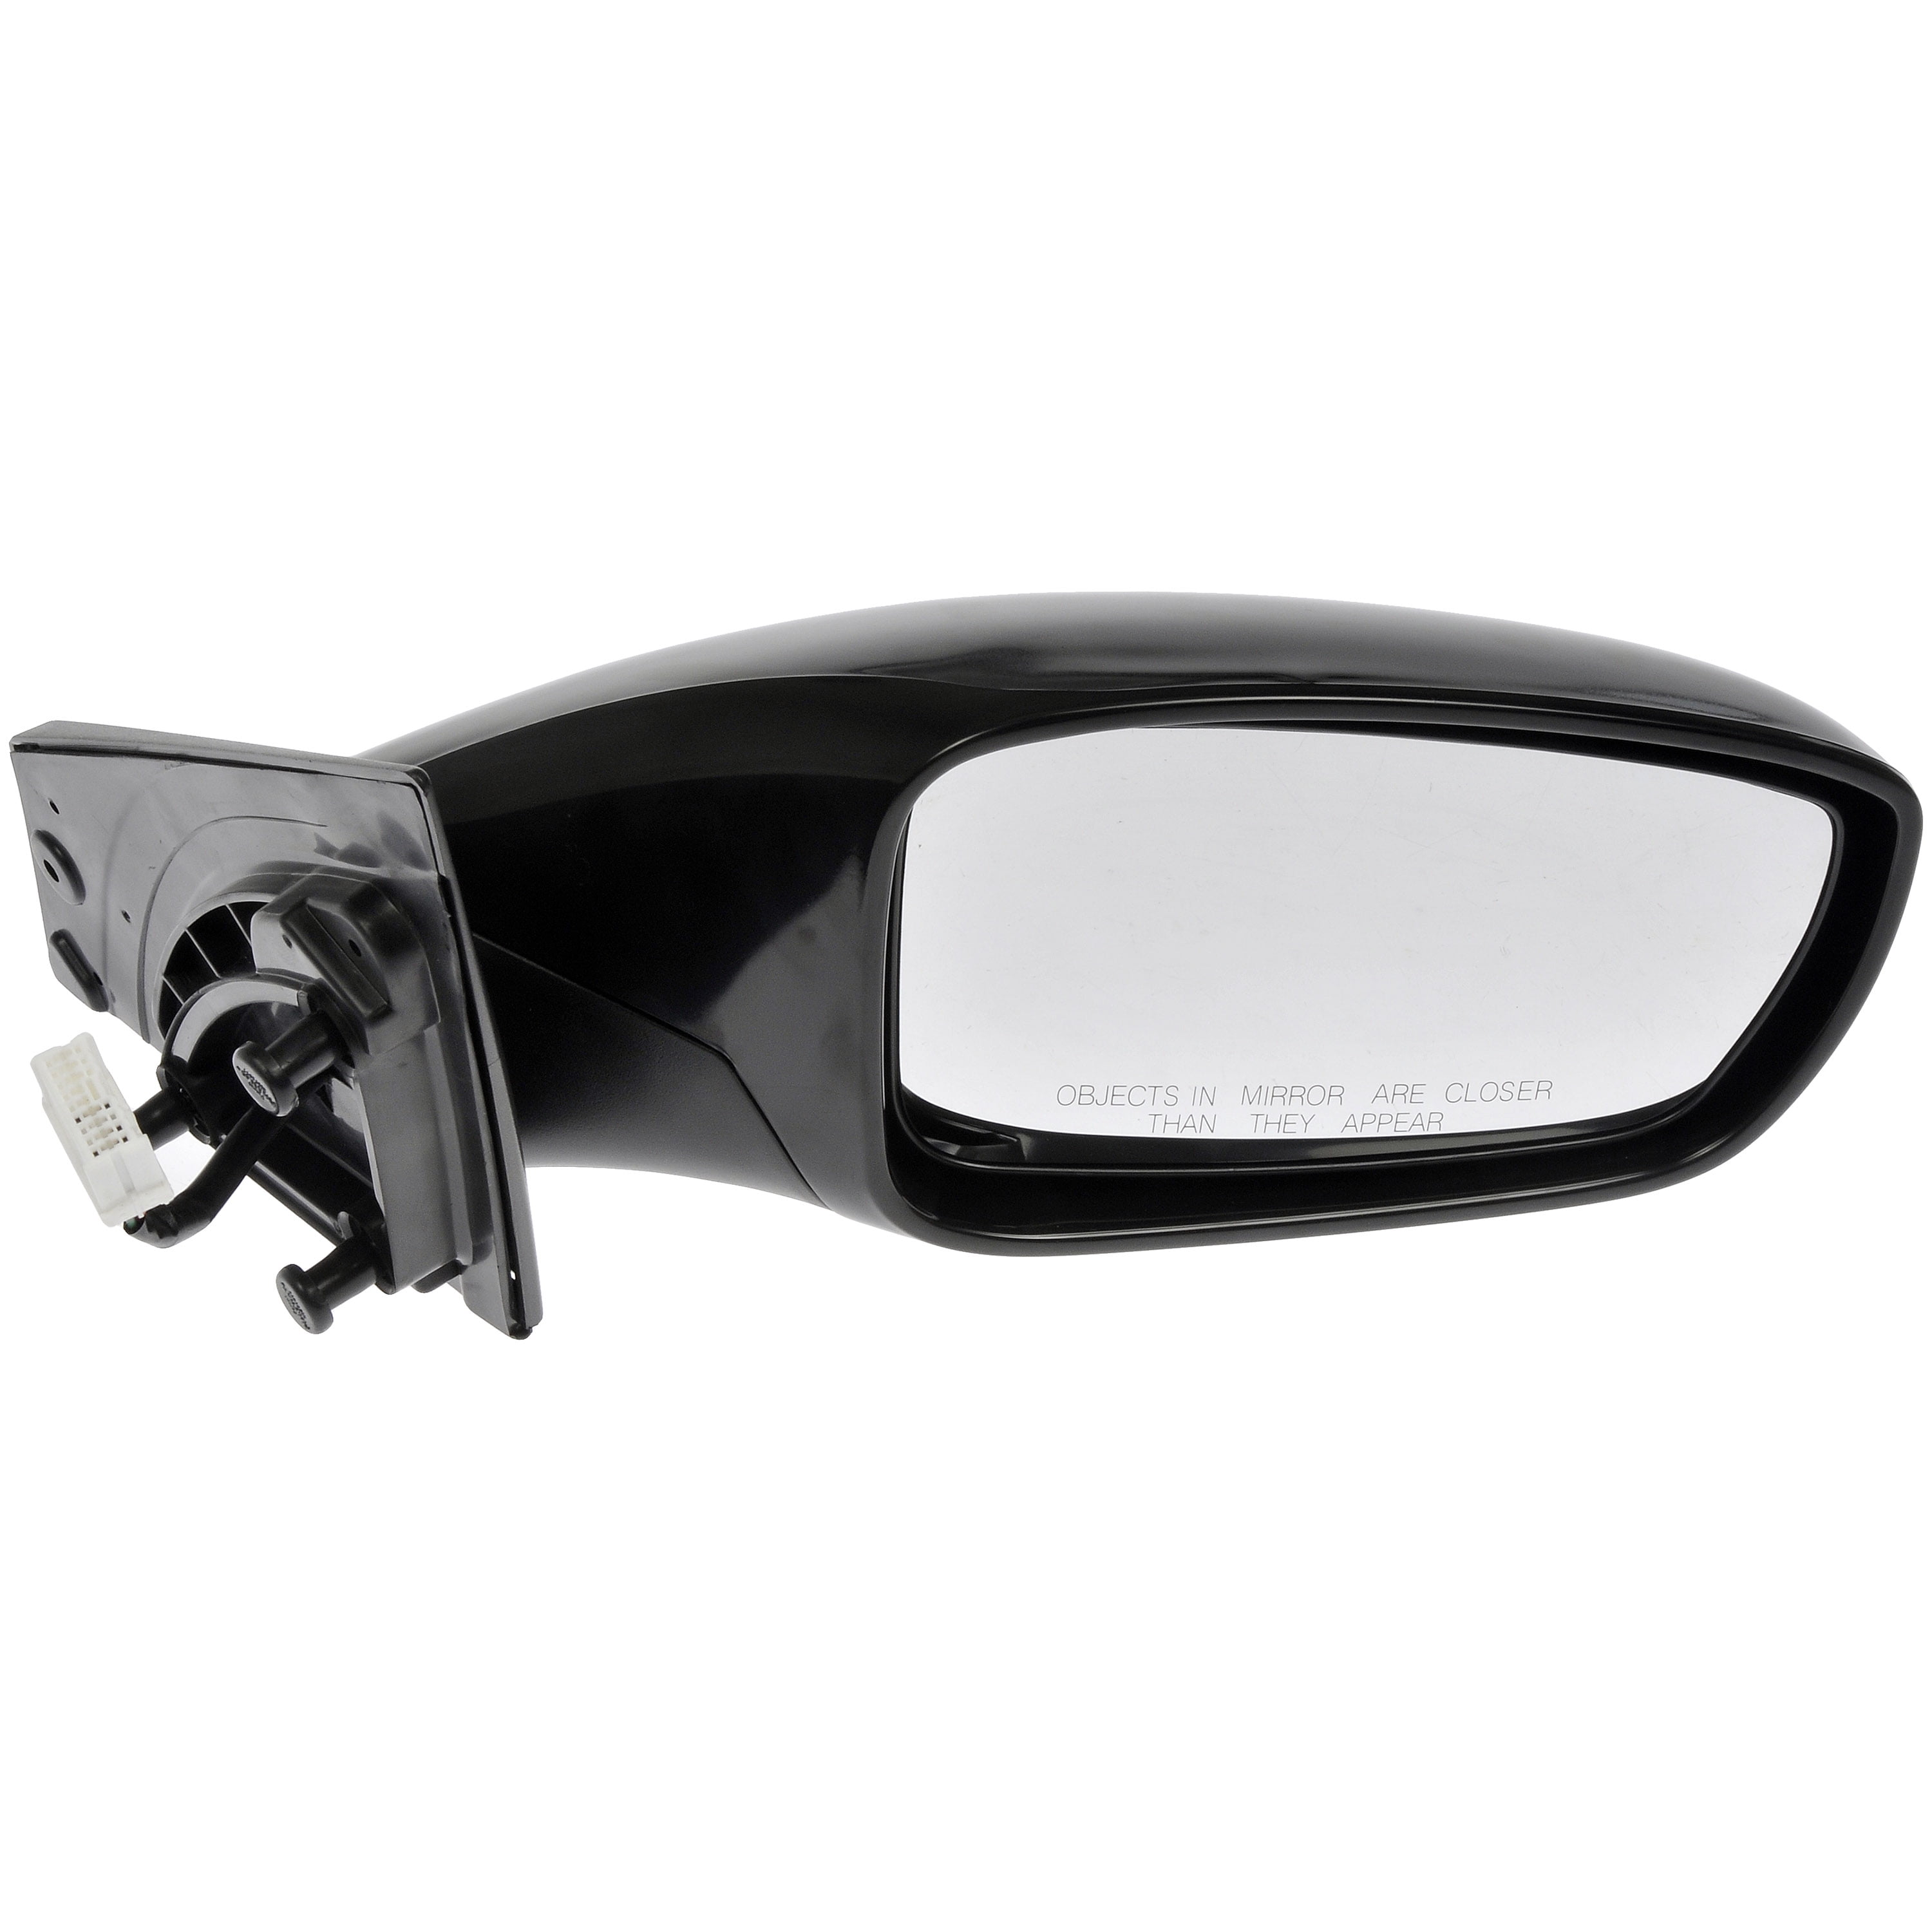 Dorman 955-2080 Passenger Side Door Mirror for Select Hyundai Models 